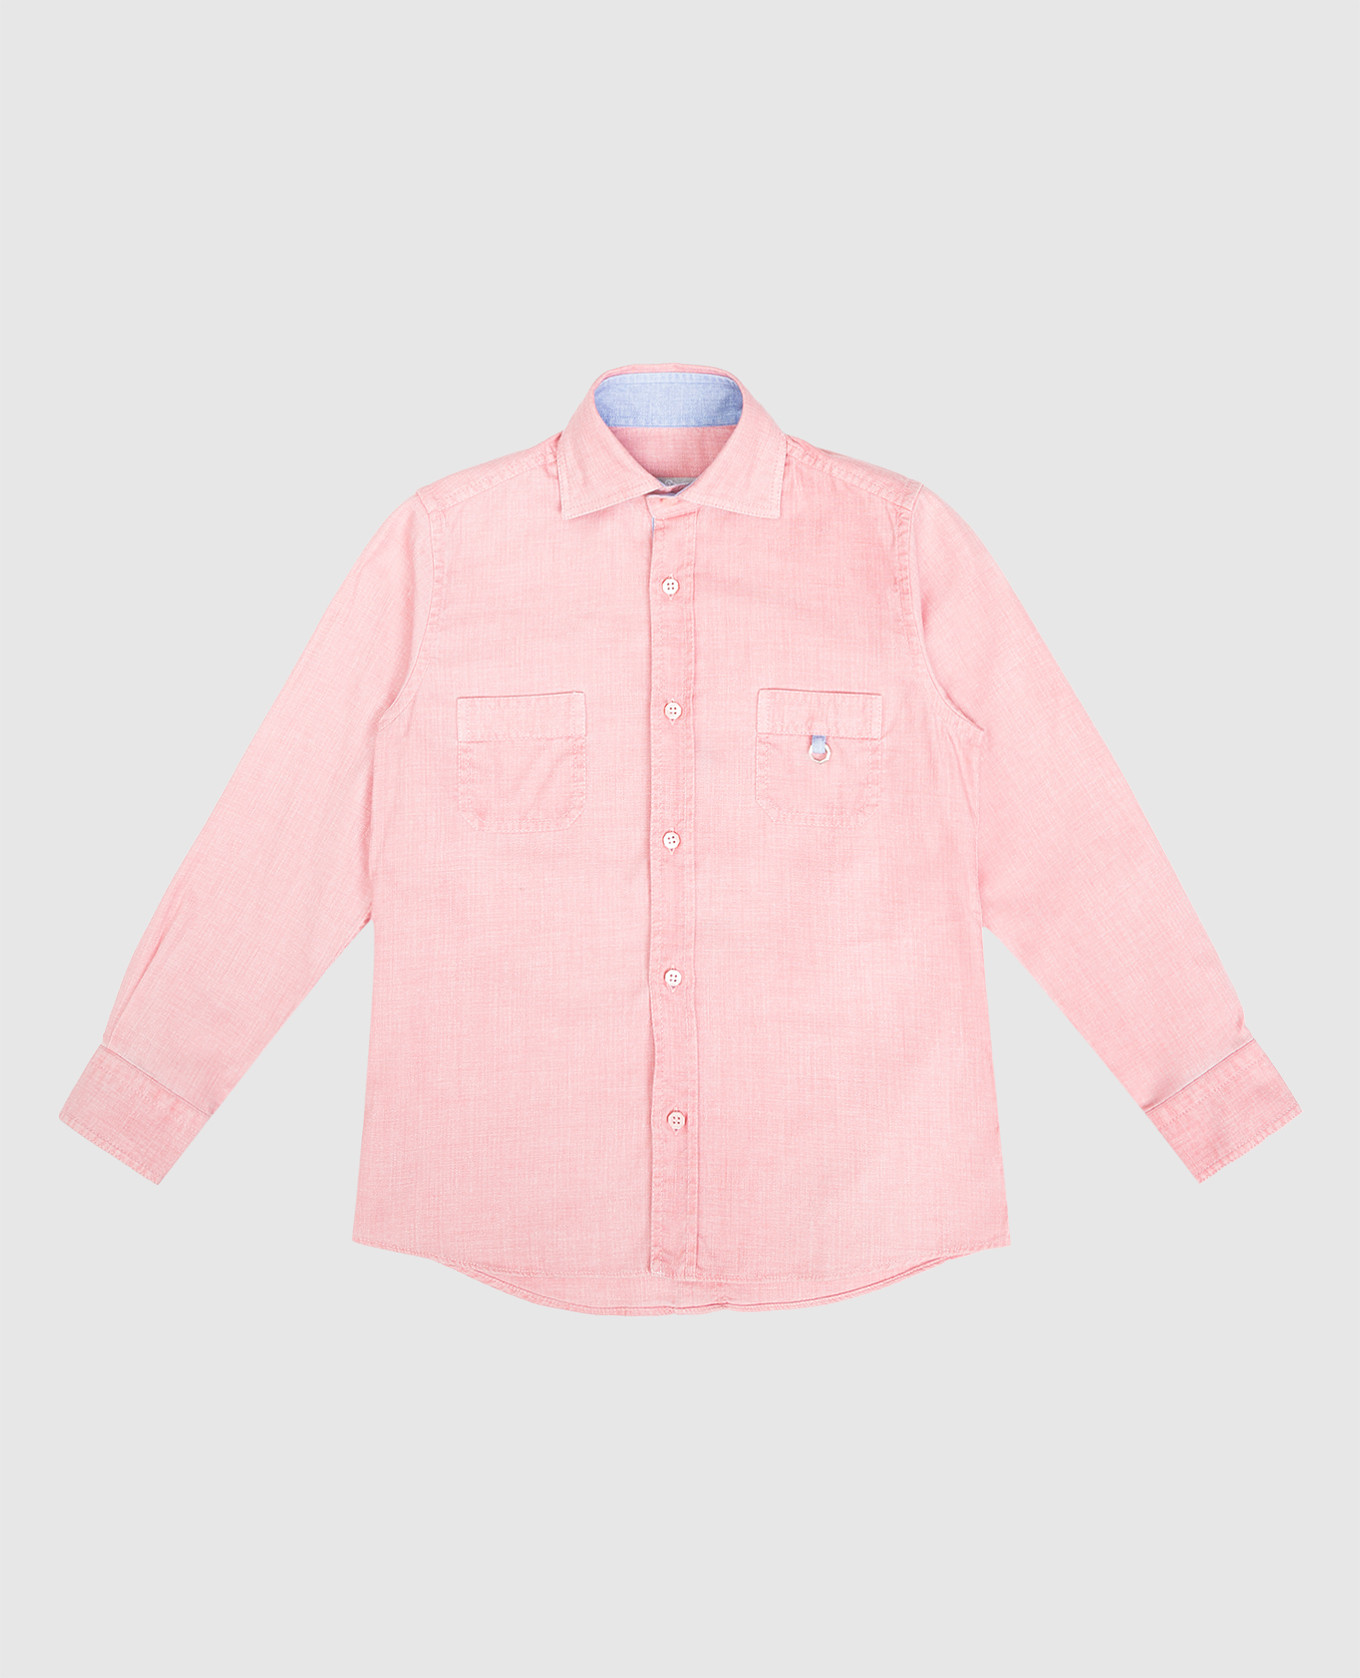 Children's pink shirt with metallic logo